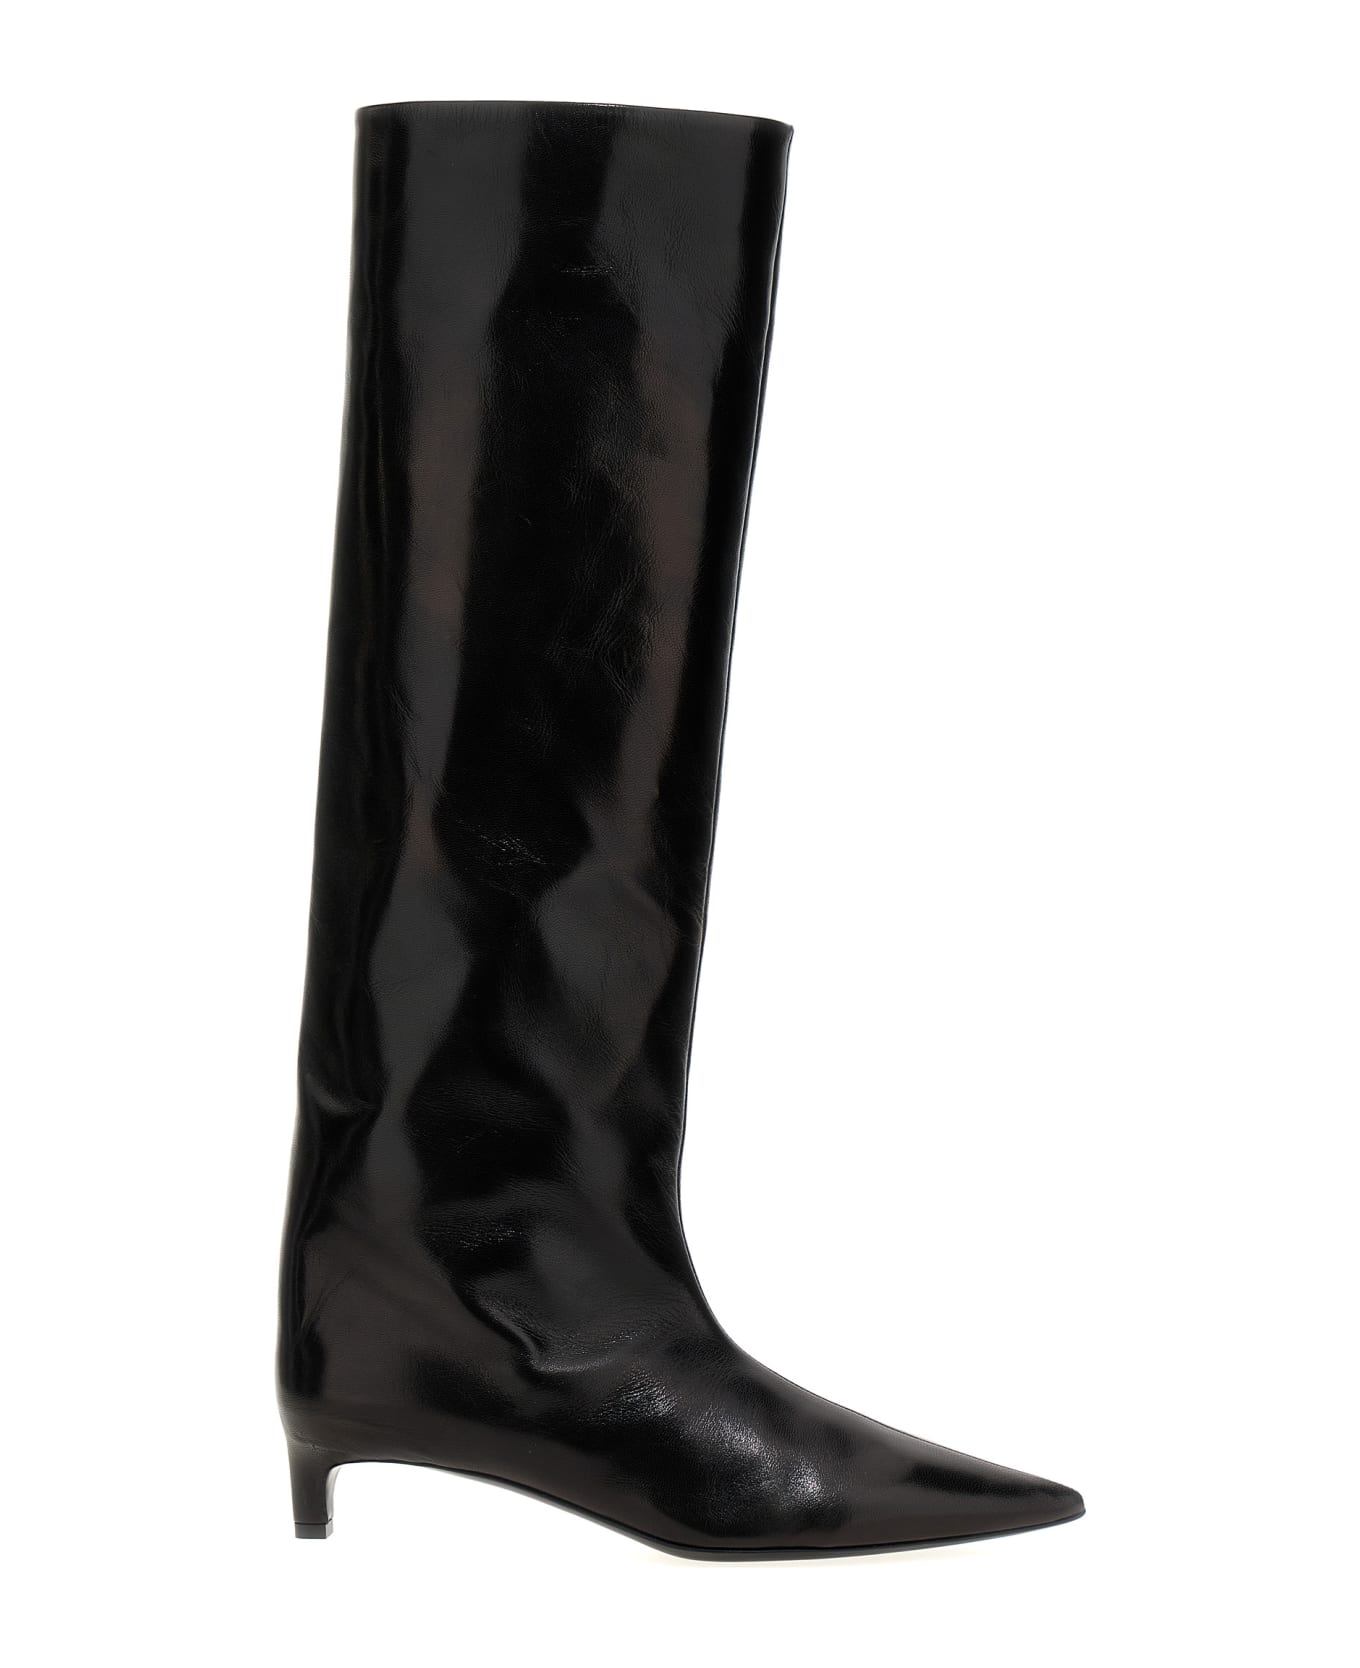 Jil Sander Leather Boots - Black   ブーツ